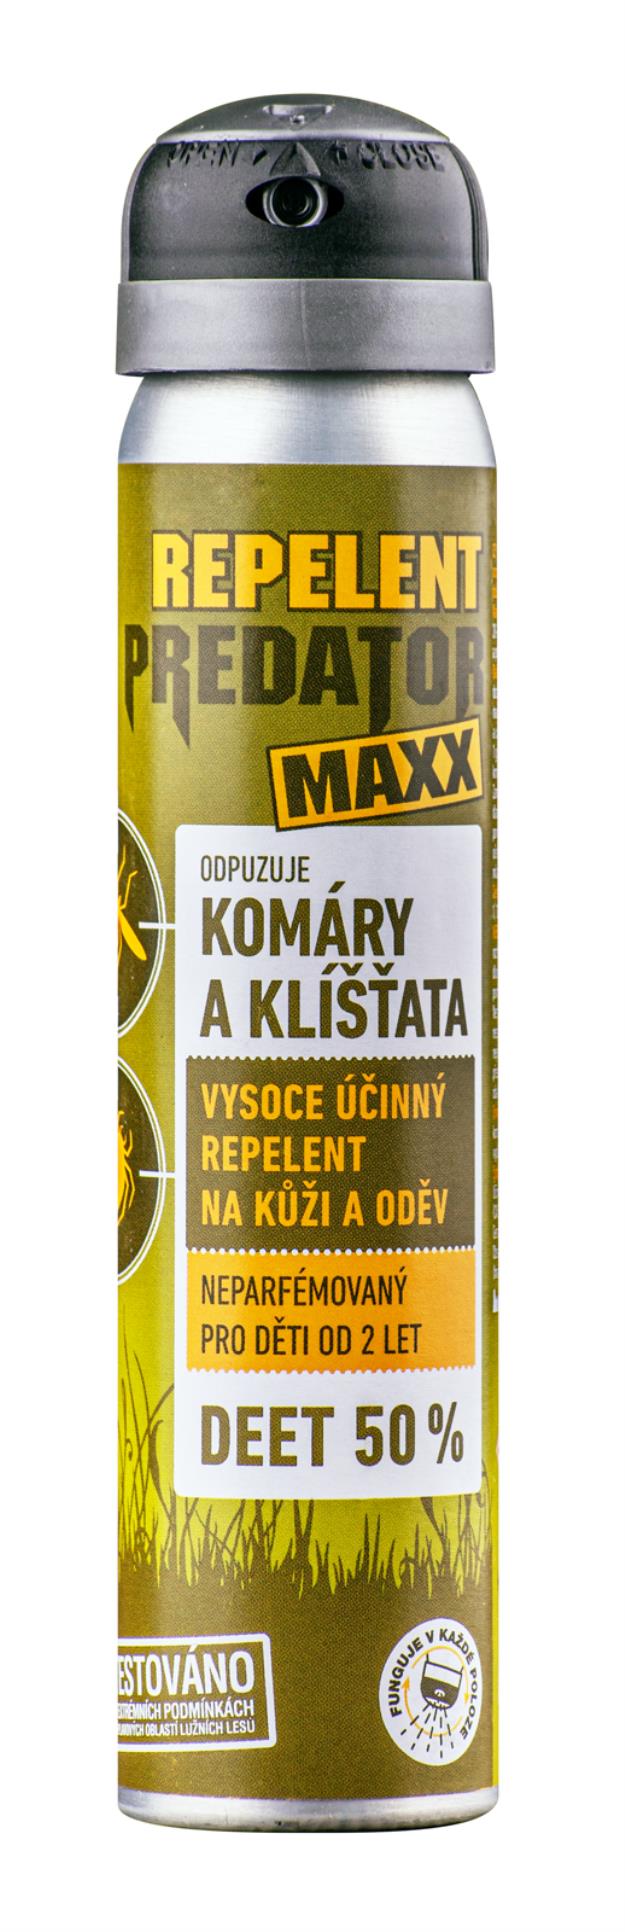 Predator Repelent Predator - maxx plus, 80ml